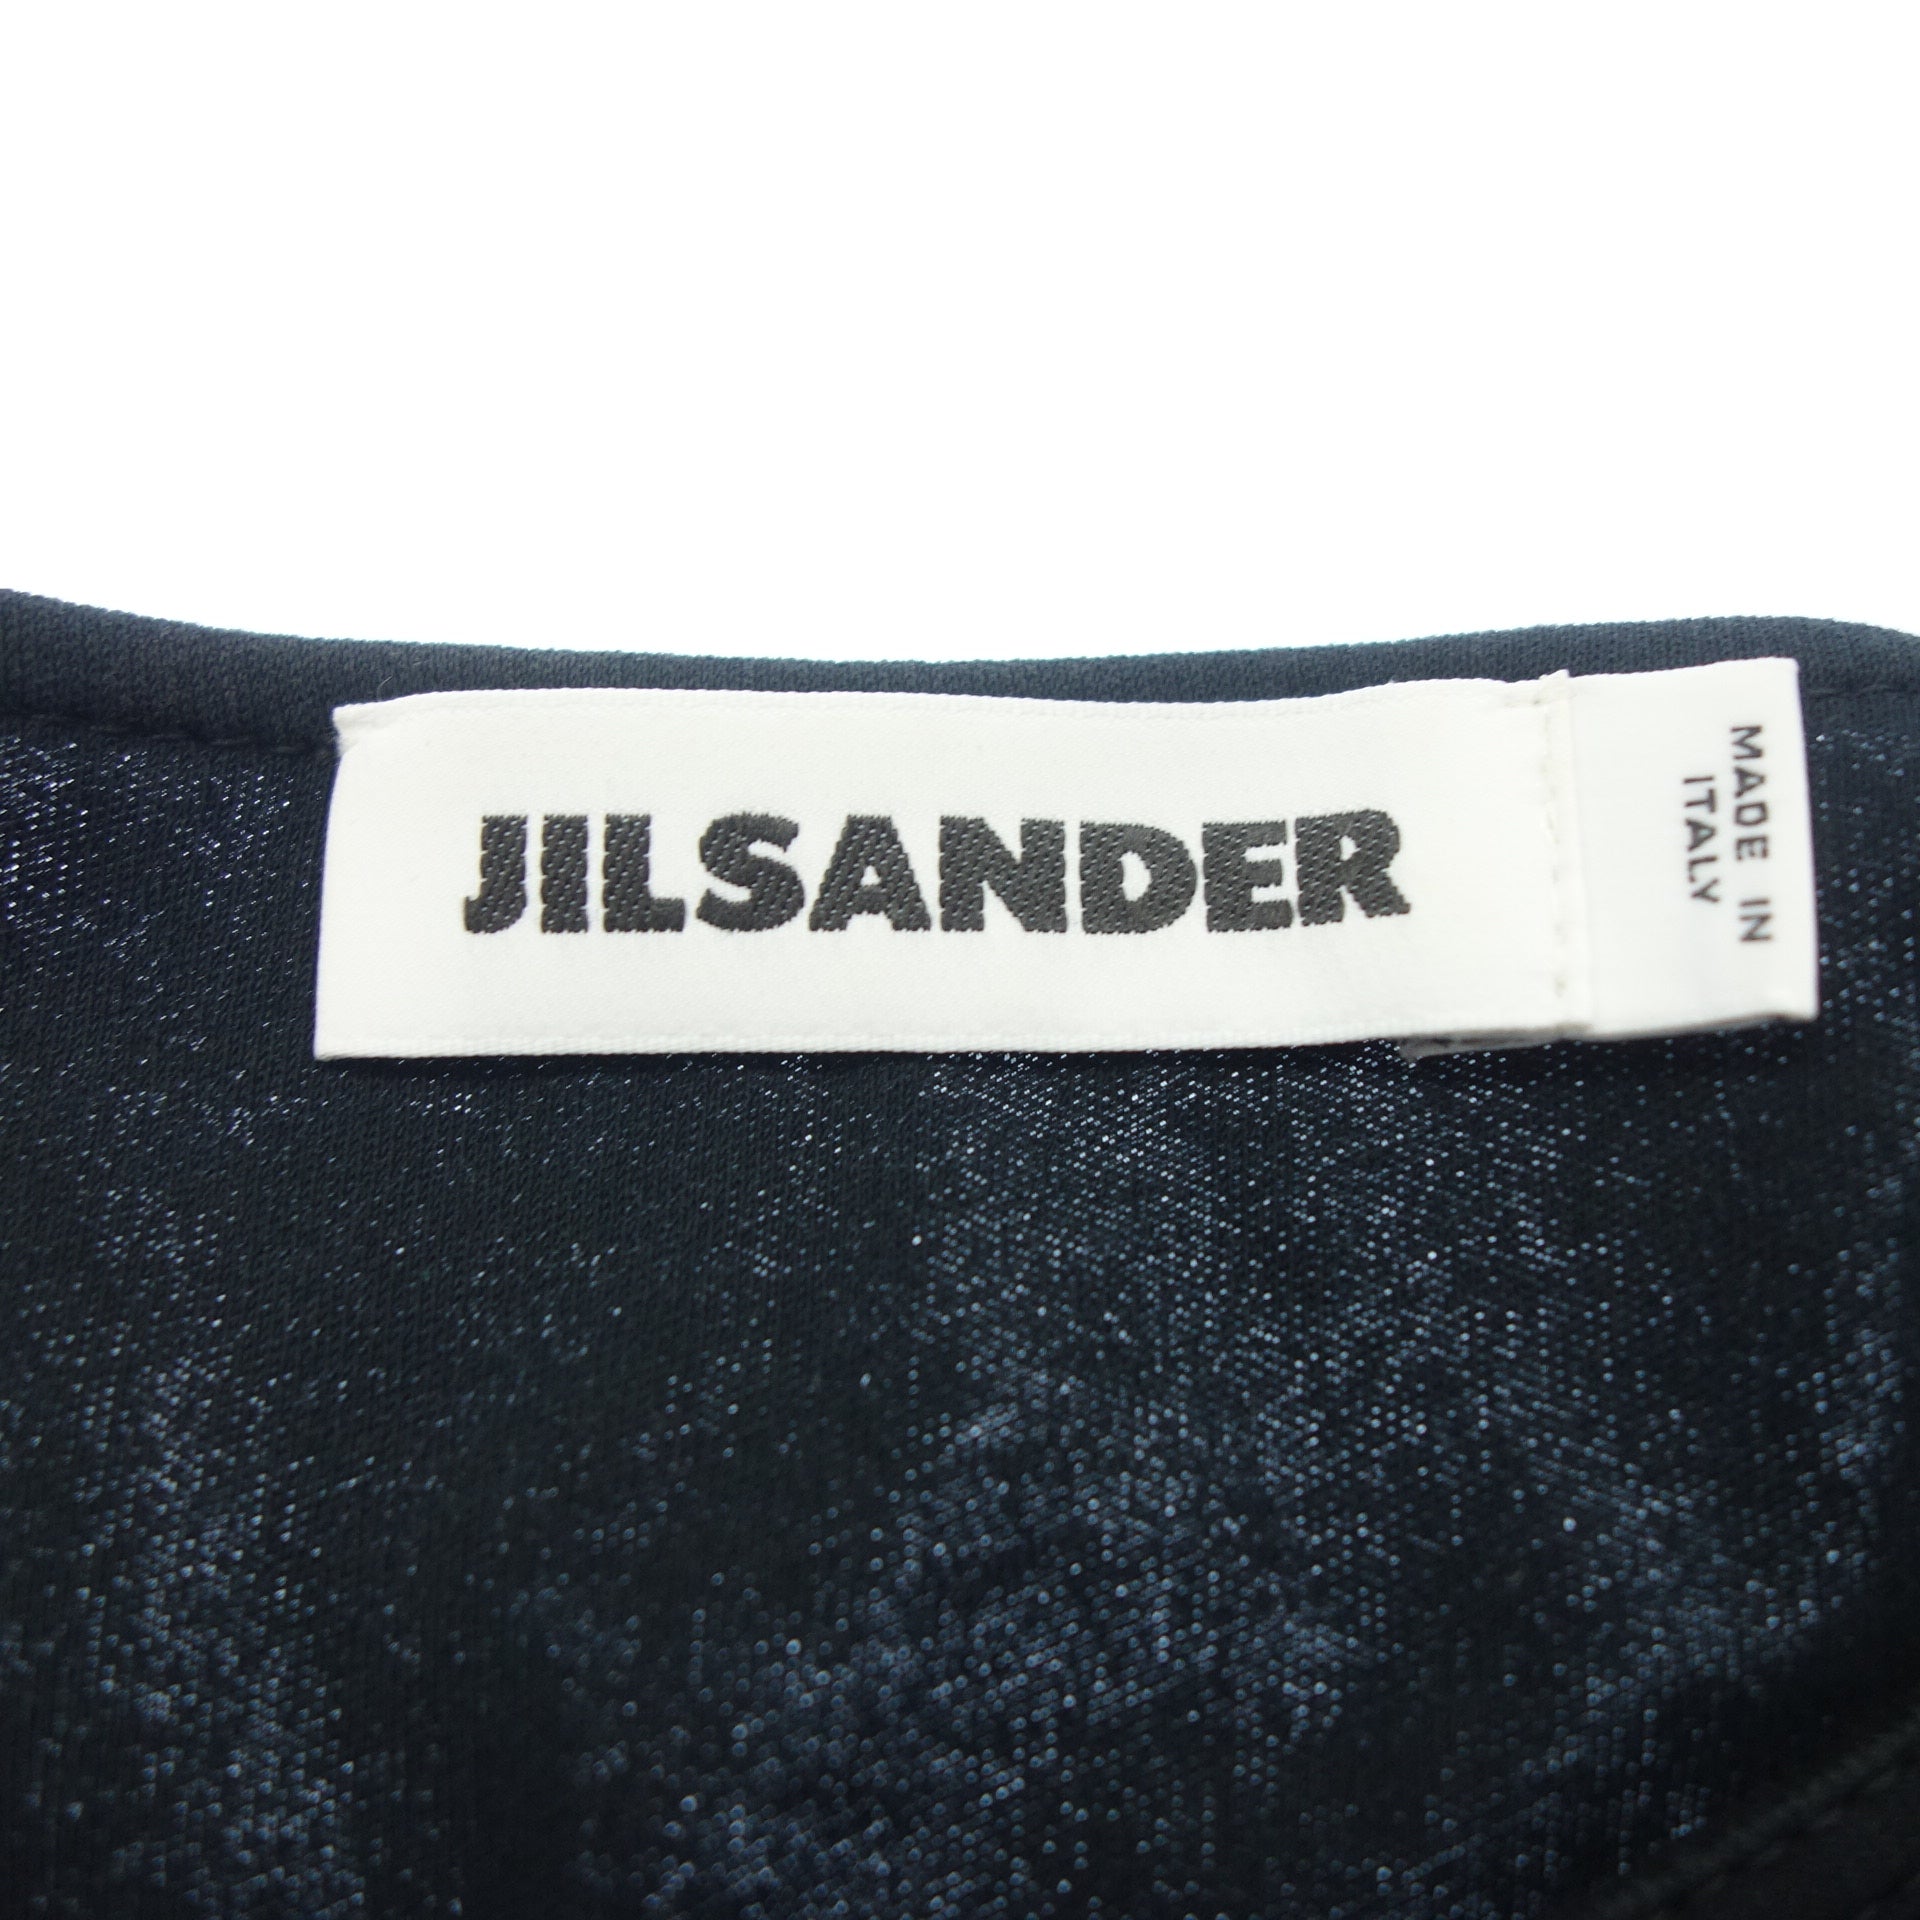 JIL SANDER ジルサンダー ワンピース 38(S位) 黒なし透け感